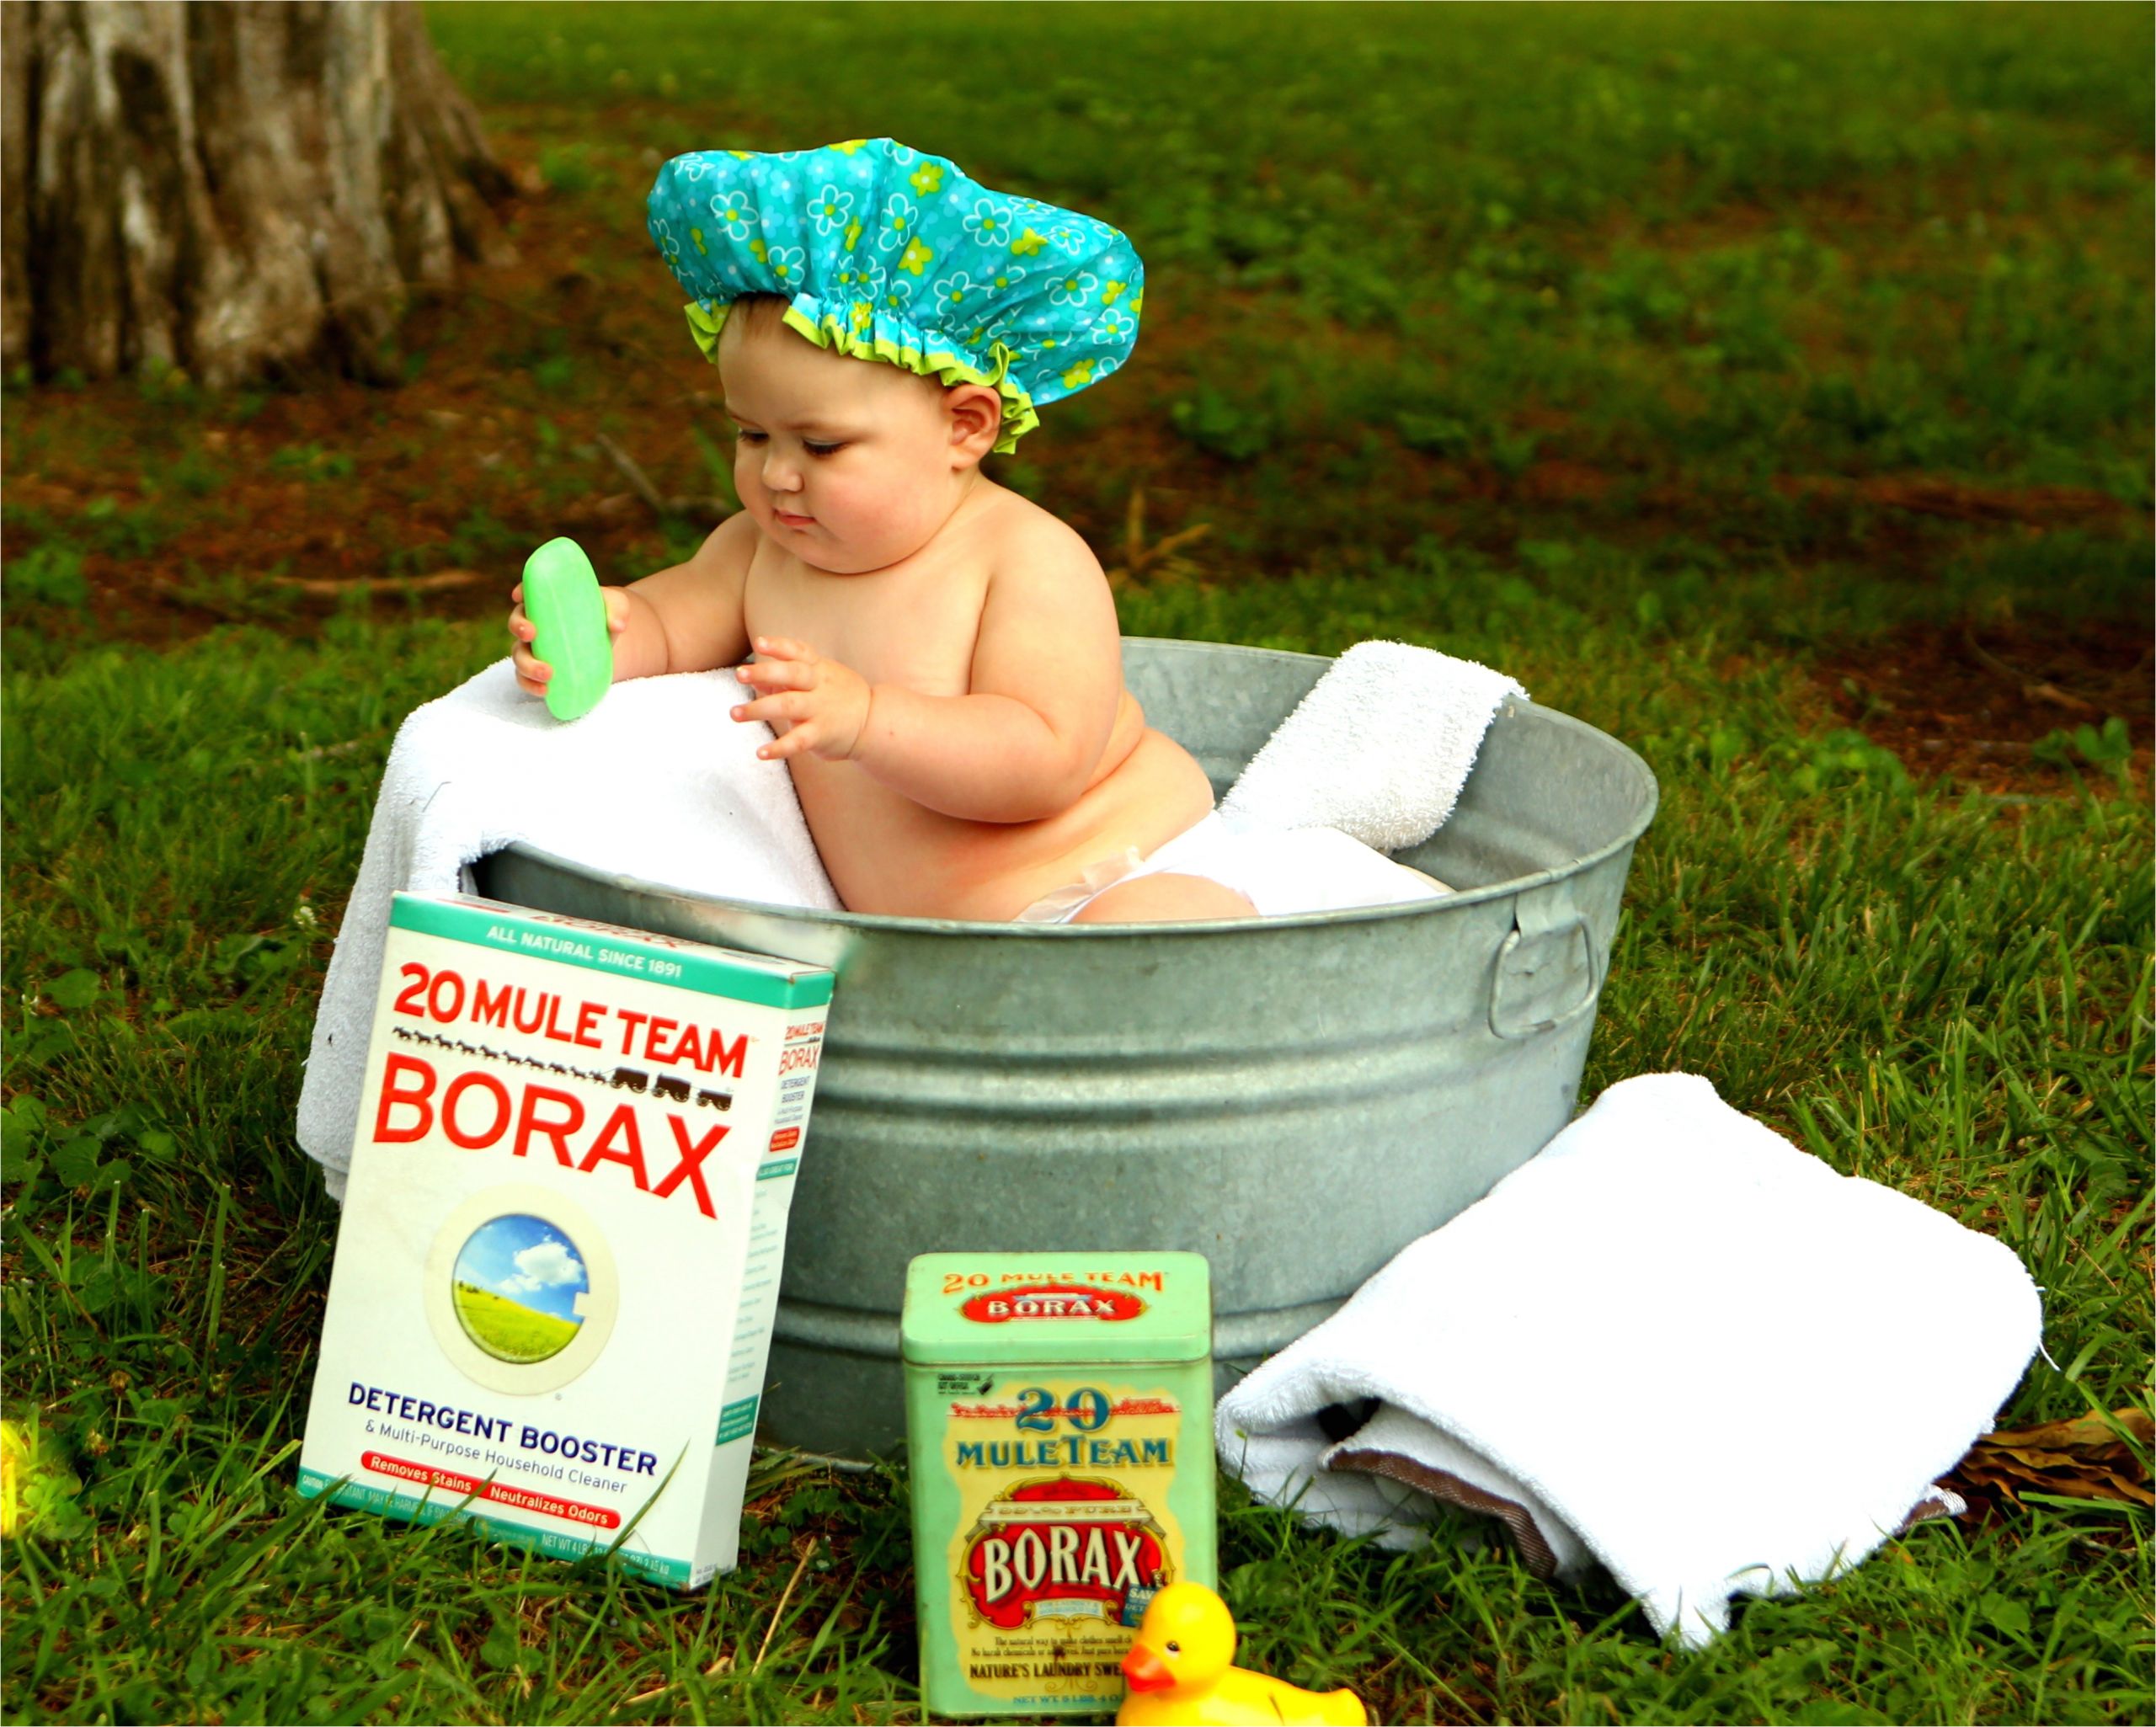 Baby Boy Bathtubs Shirtless Baby Boy In Galvanized Tub · Free Stock